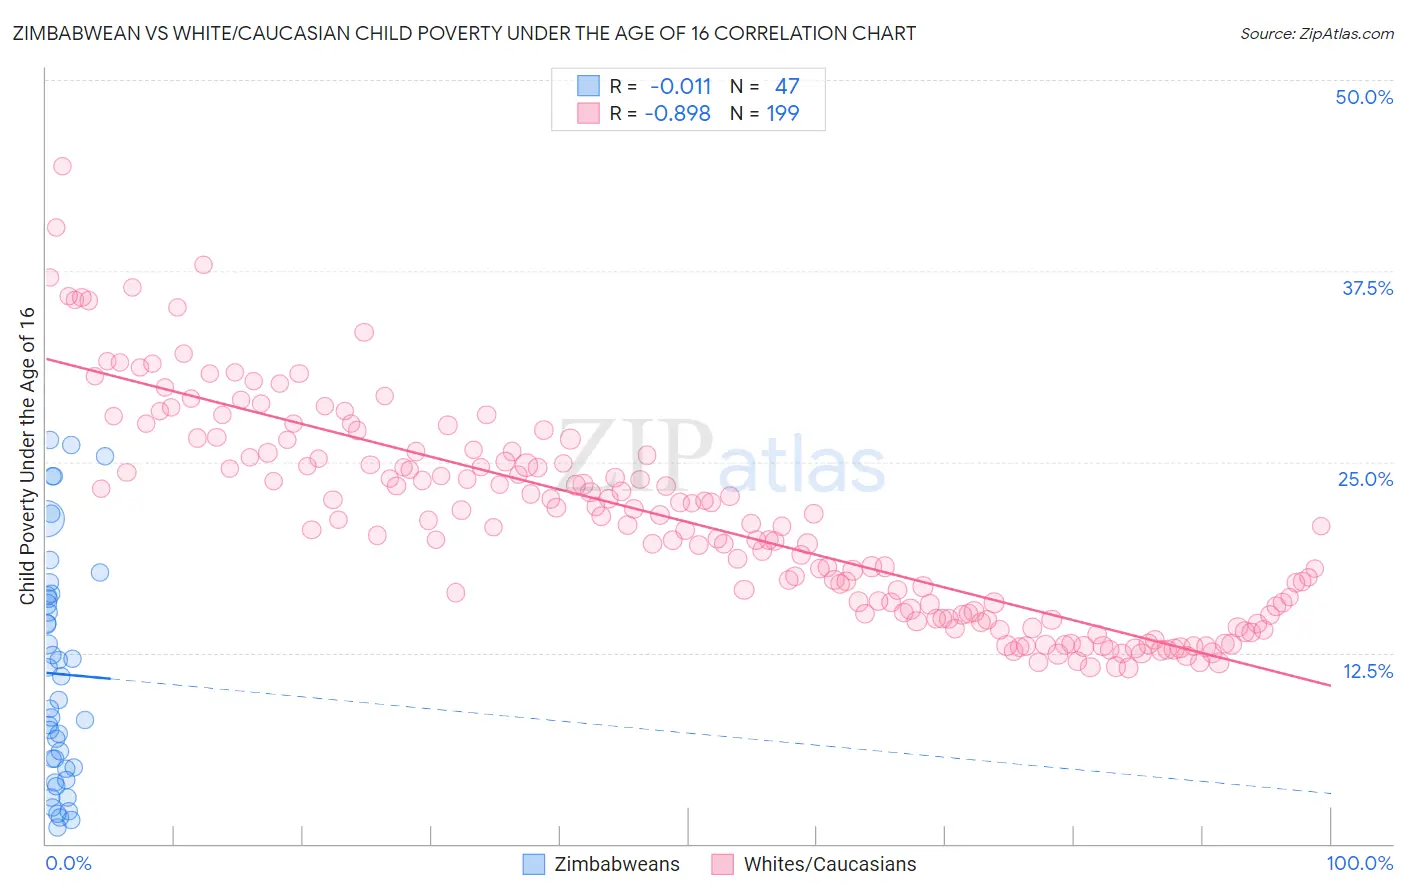 Zimbabwean vs White/Caucasian Child Poverty Under the Age of 16